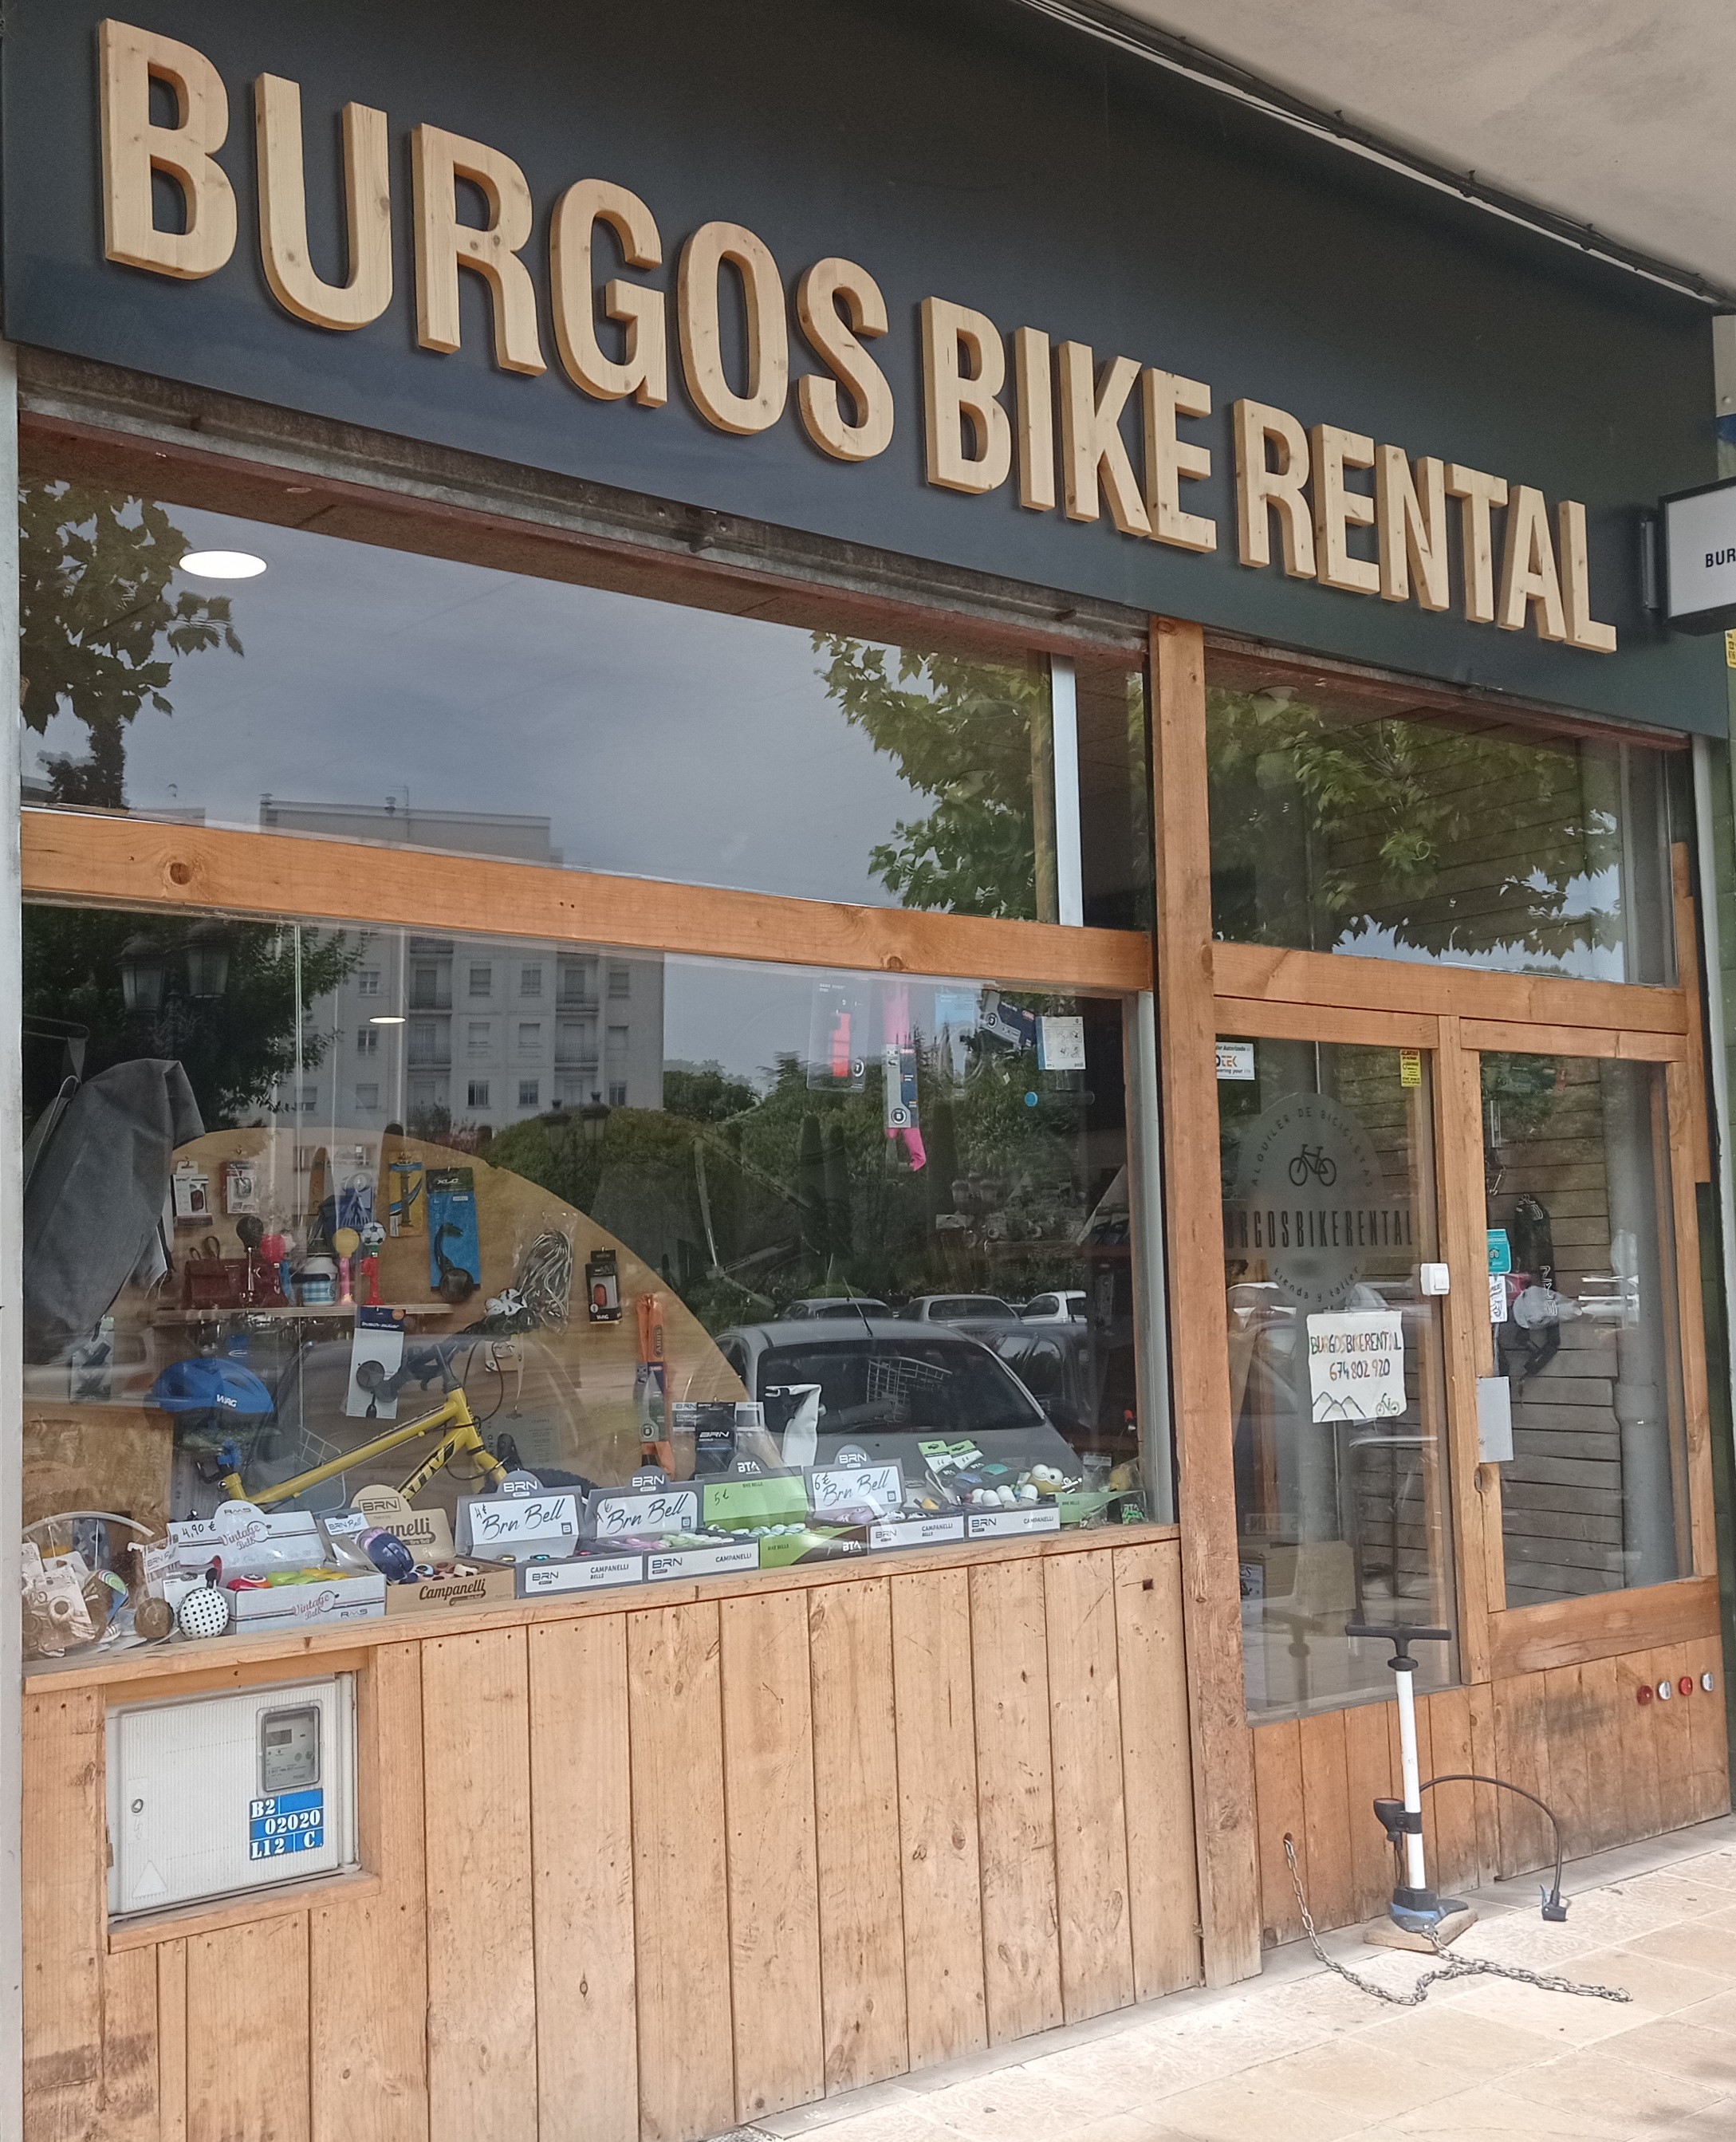 Burgos Bike Rental